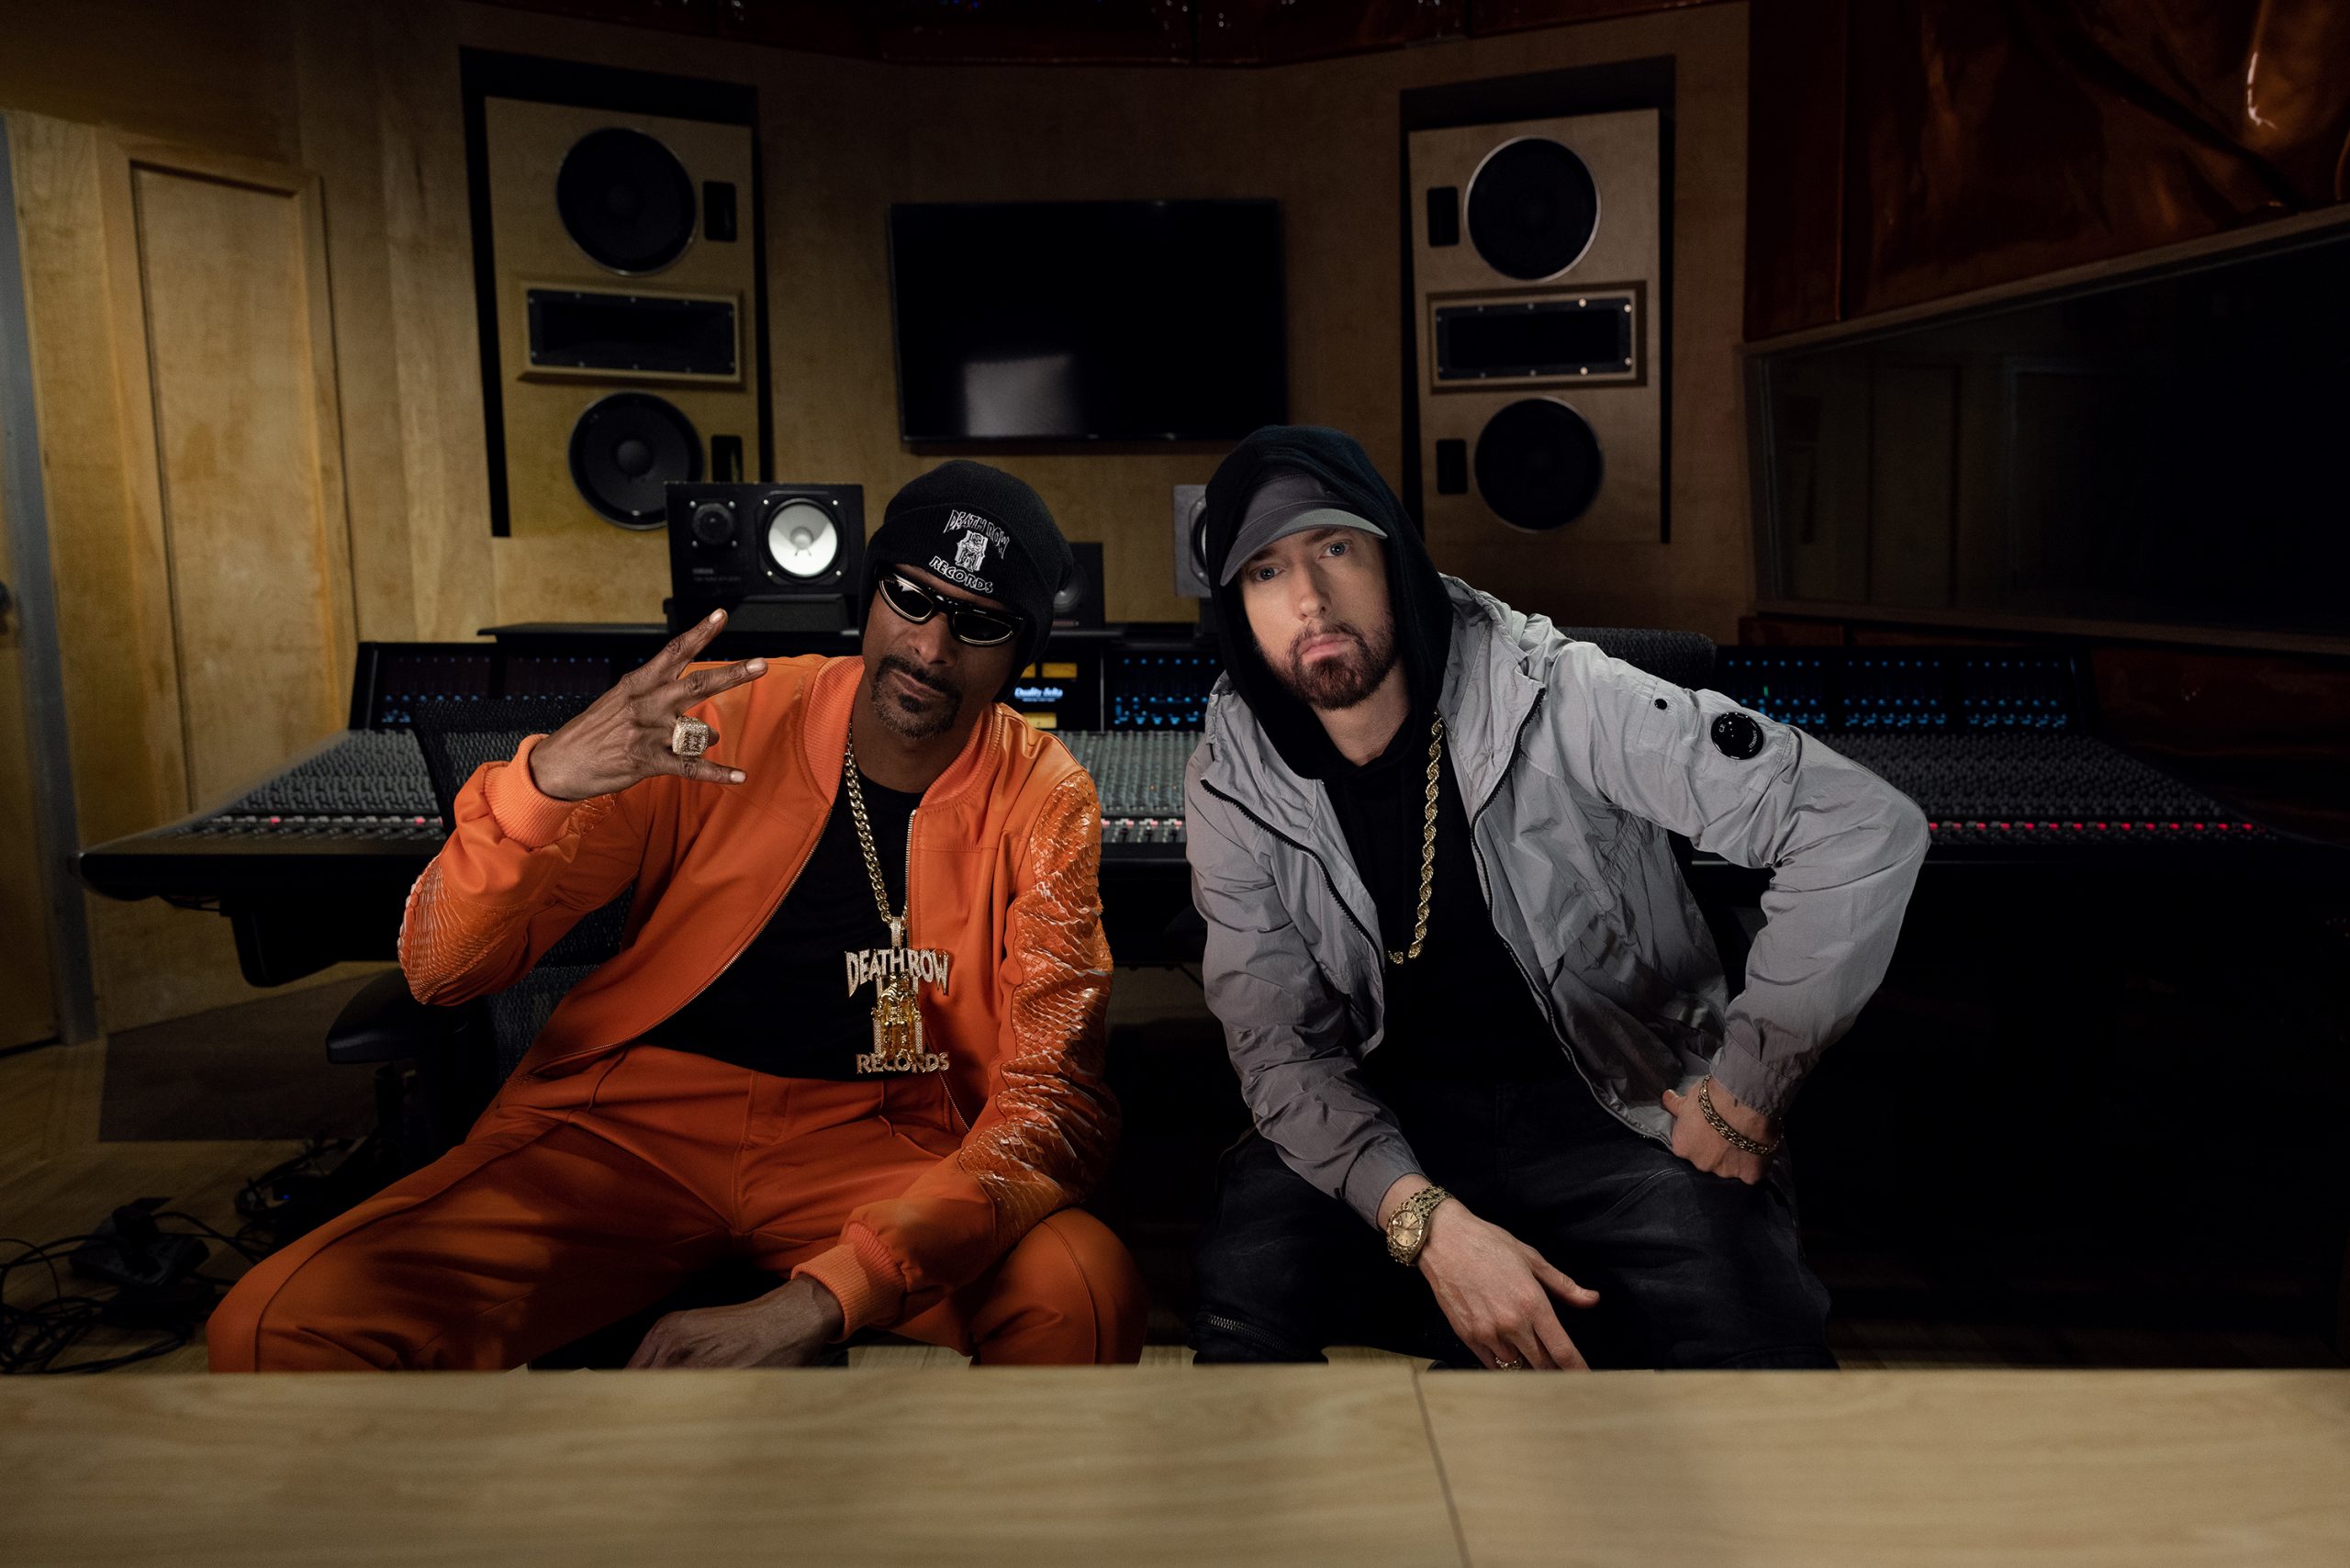 Eminem & Snoop Dogg – From The D 2 The LBC Lyrics